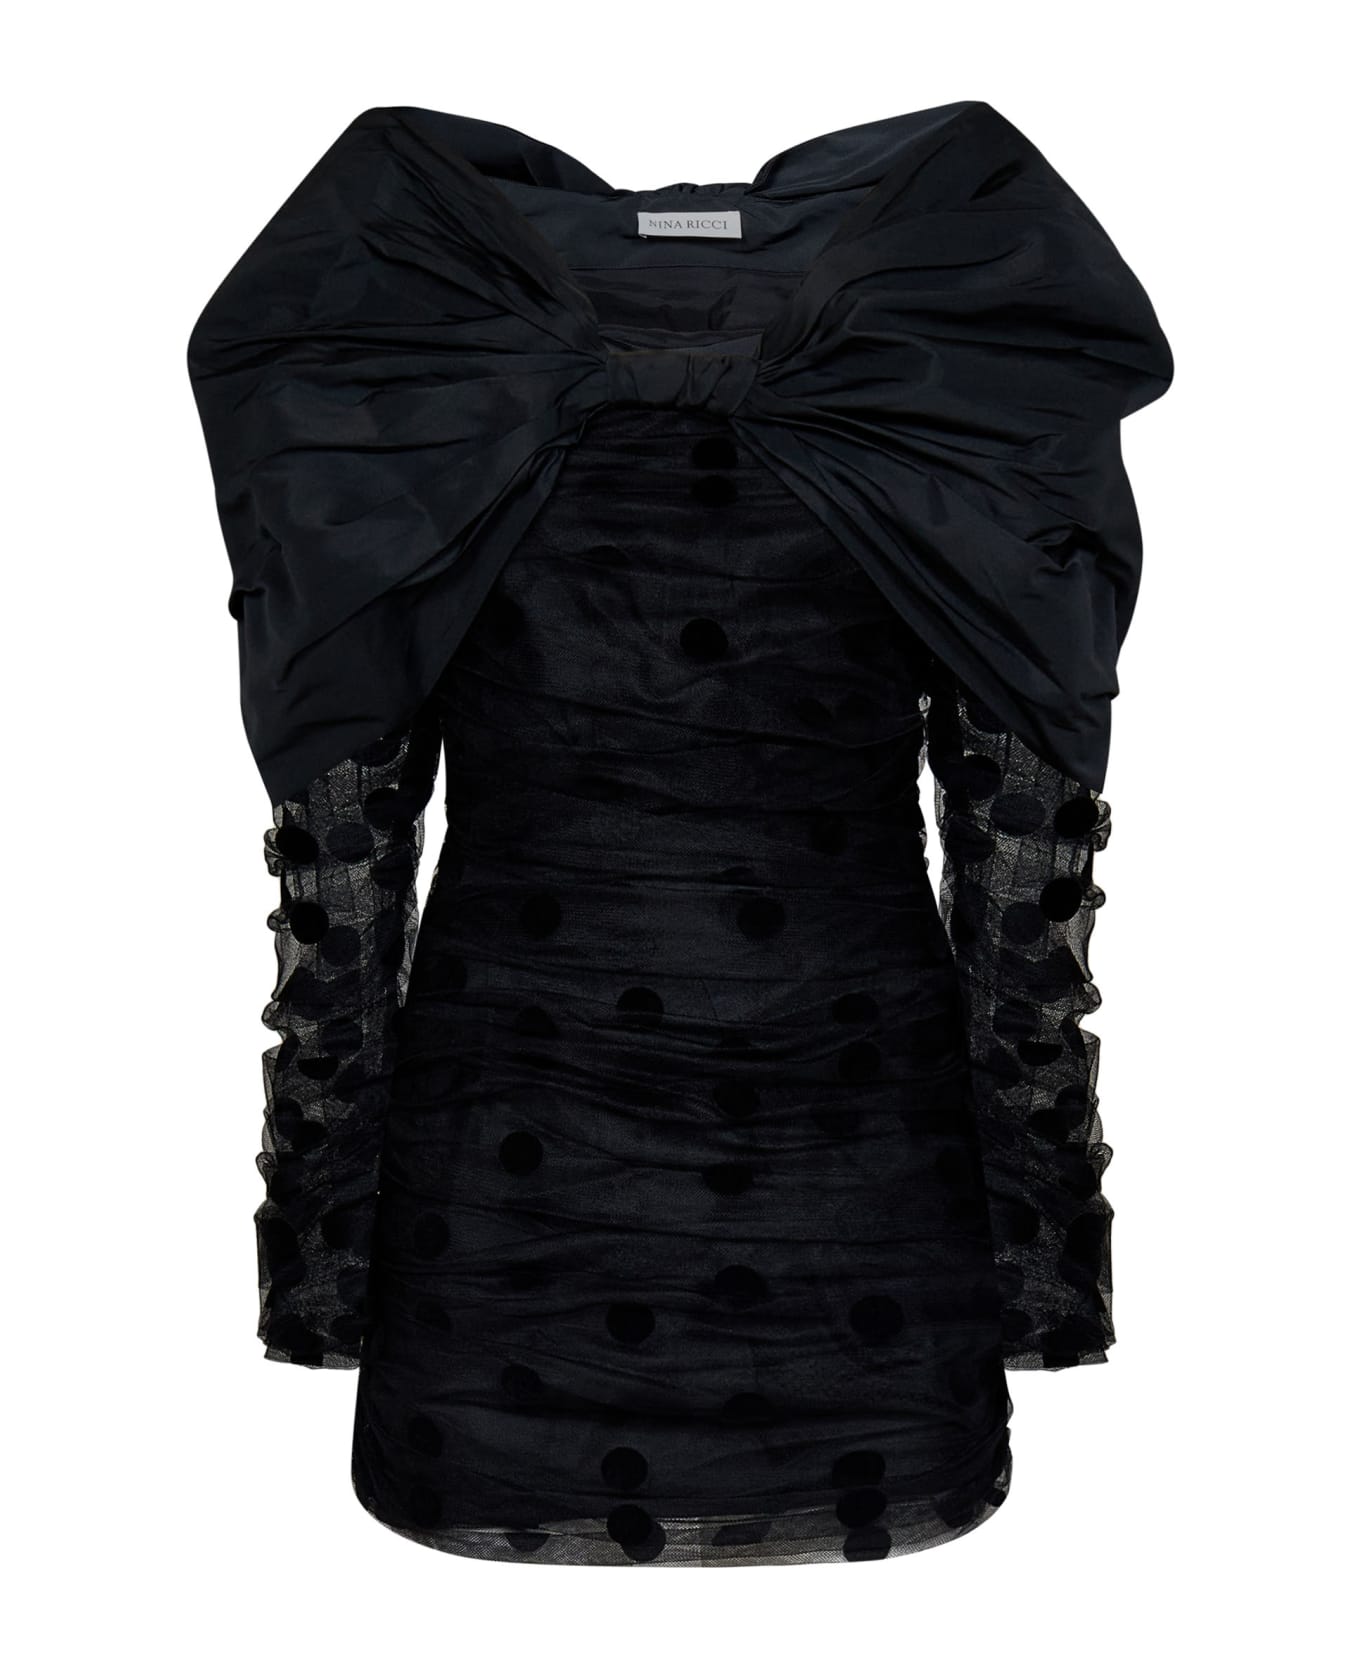 Nina Ricci Mini Dress - Black